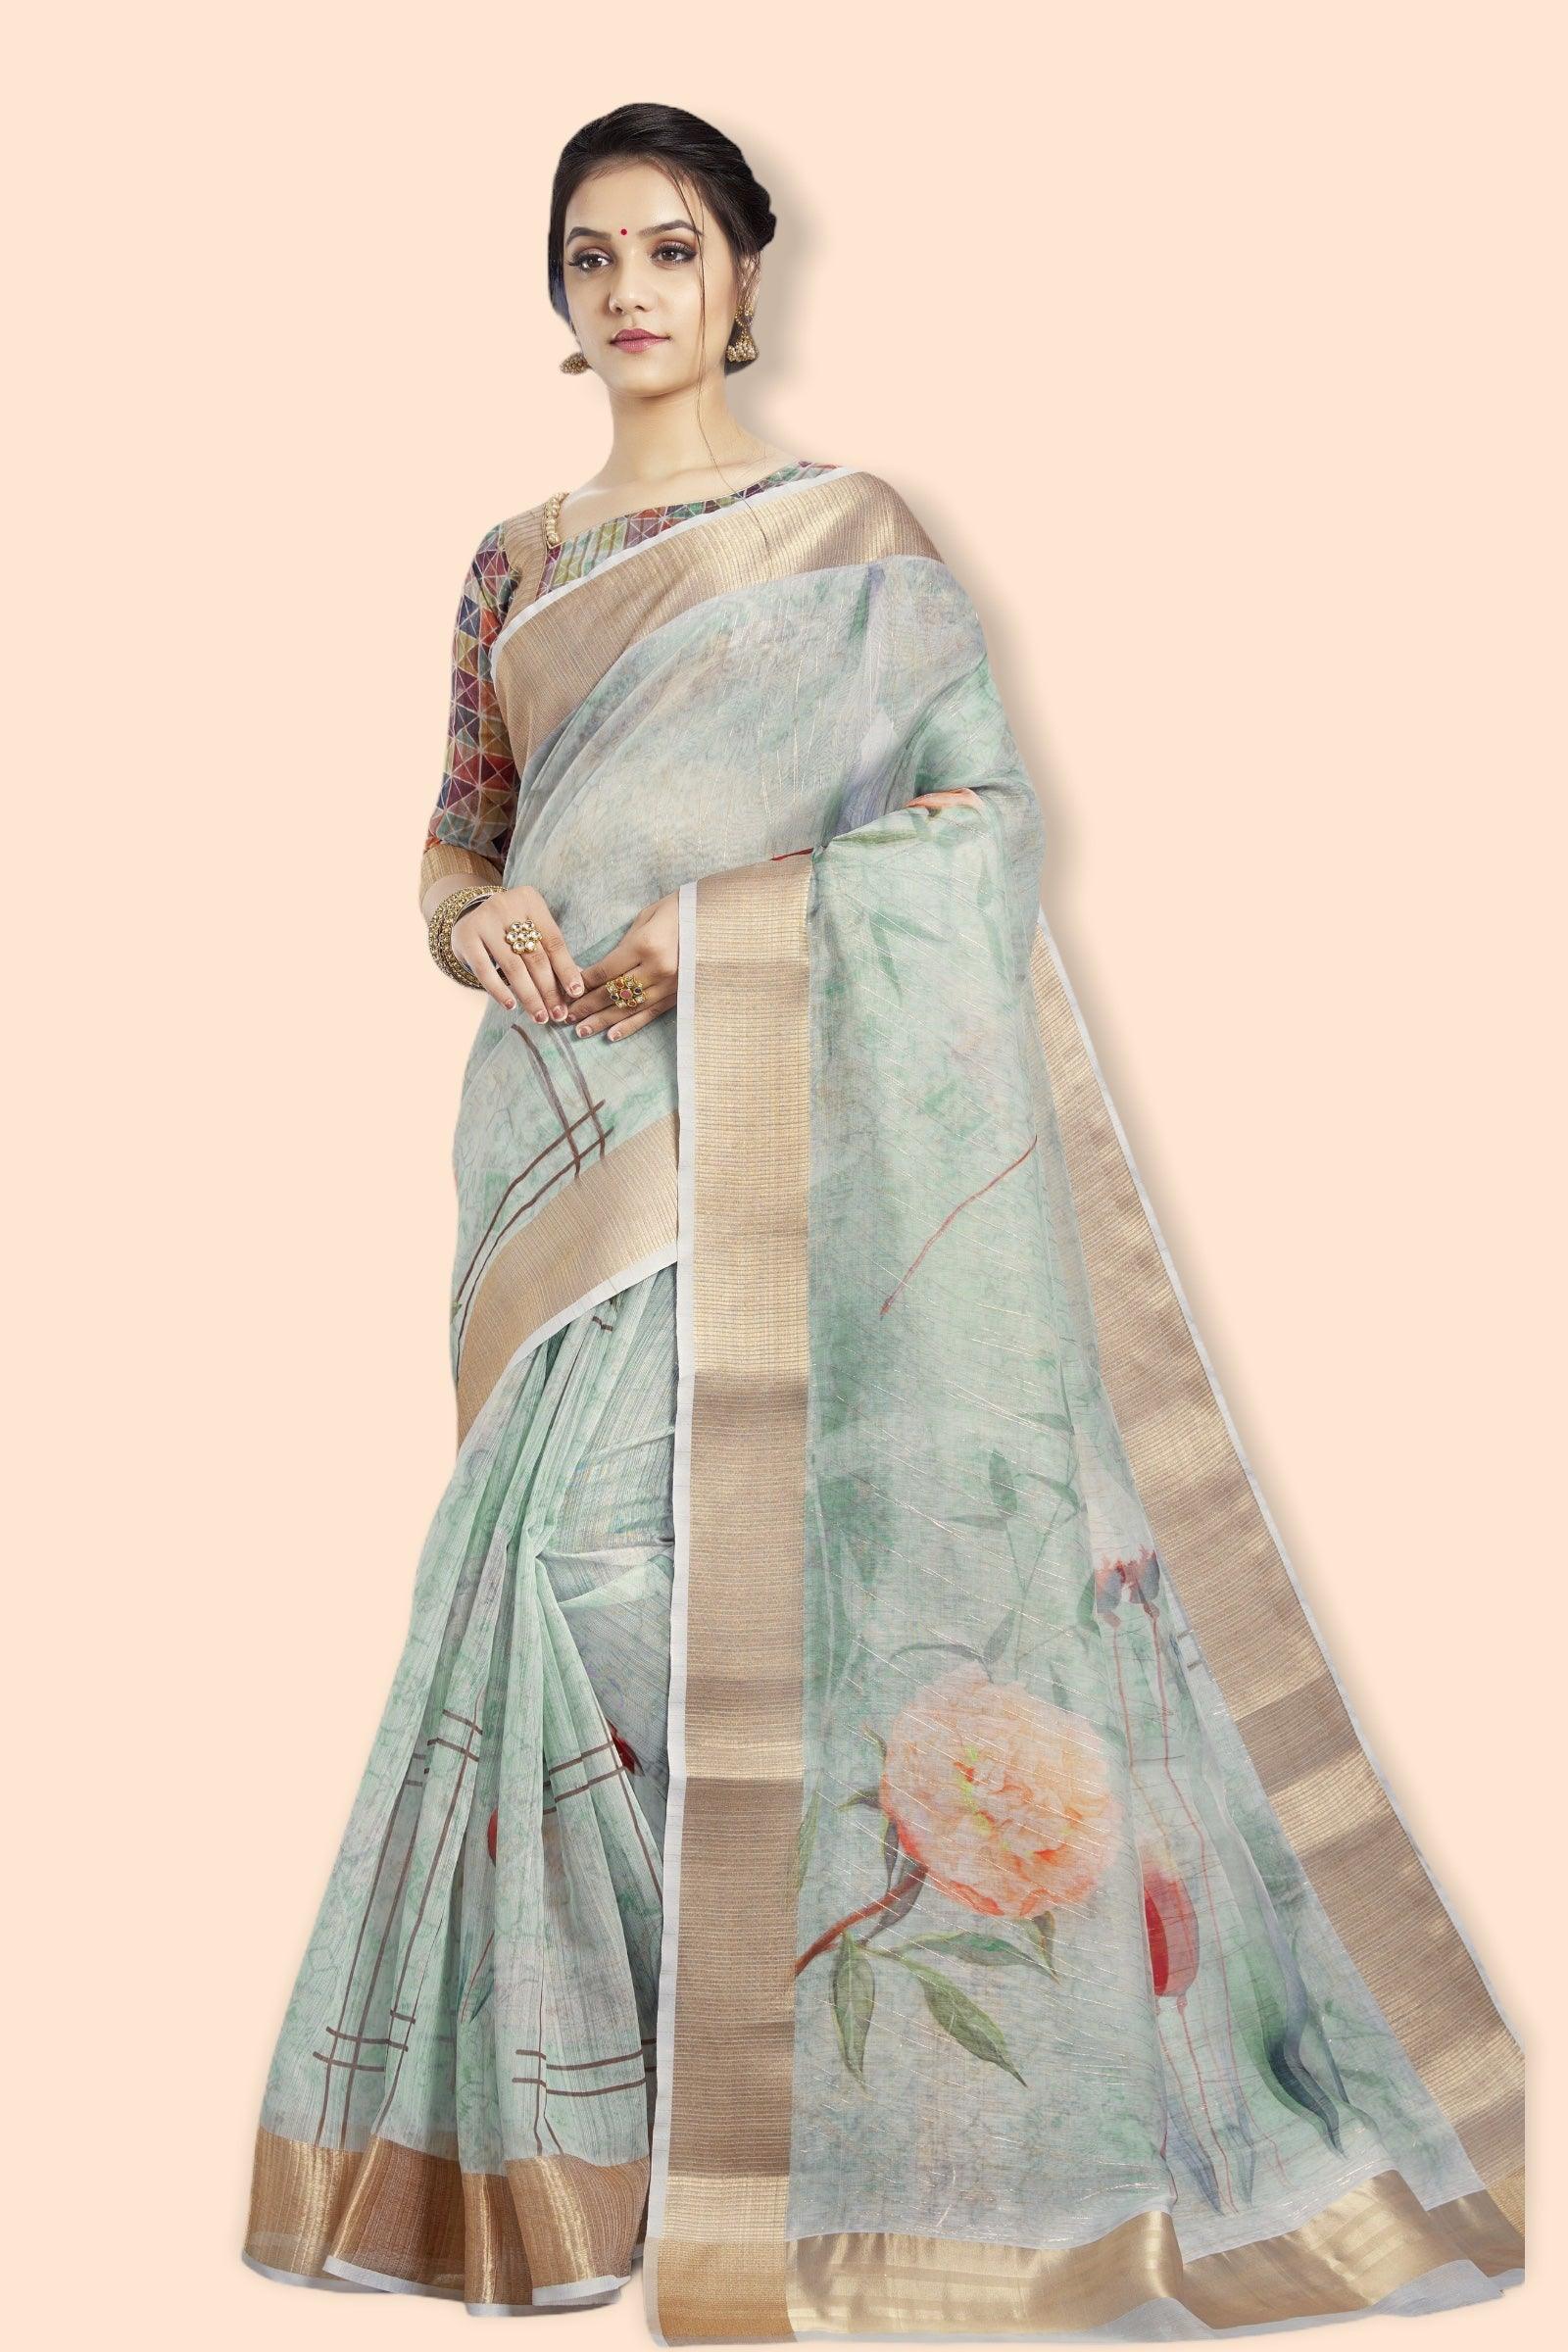 Mimosa Women's Woven Design Banarasi Lenin Saree With Blouse Piece : S –  http://mimosa.in/